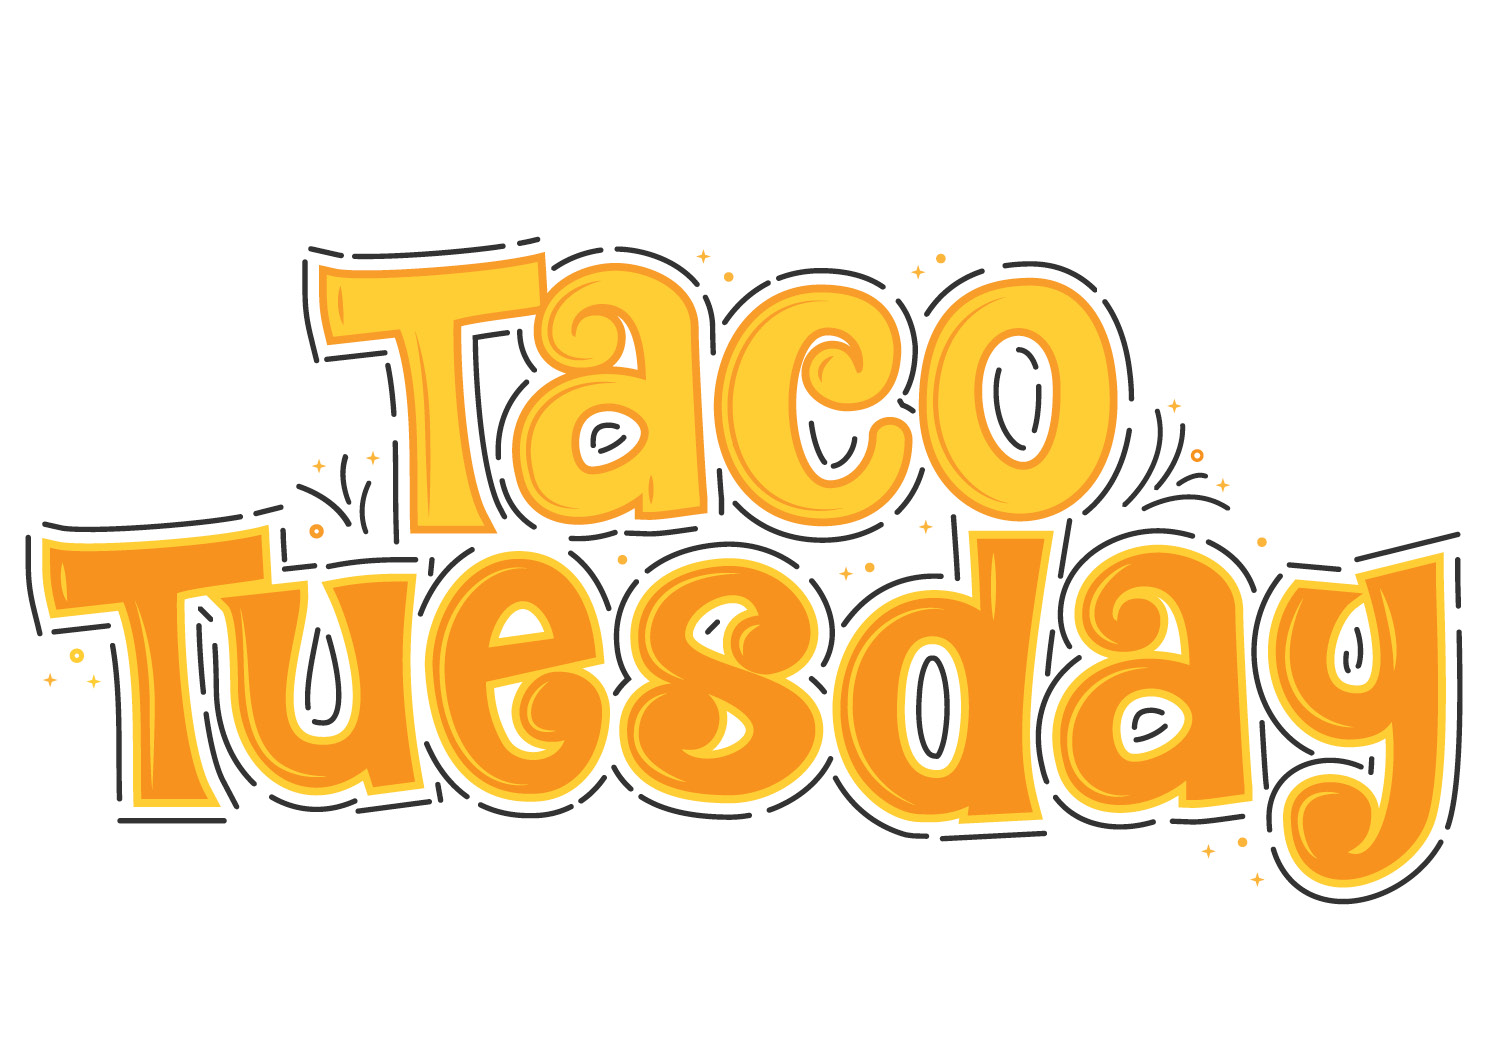 Enjoy free tacos today!